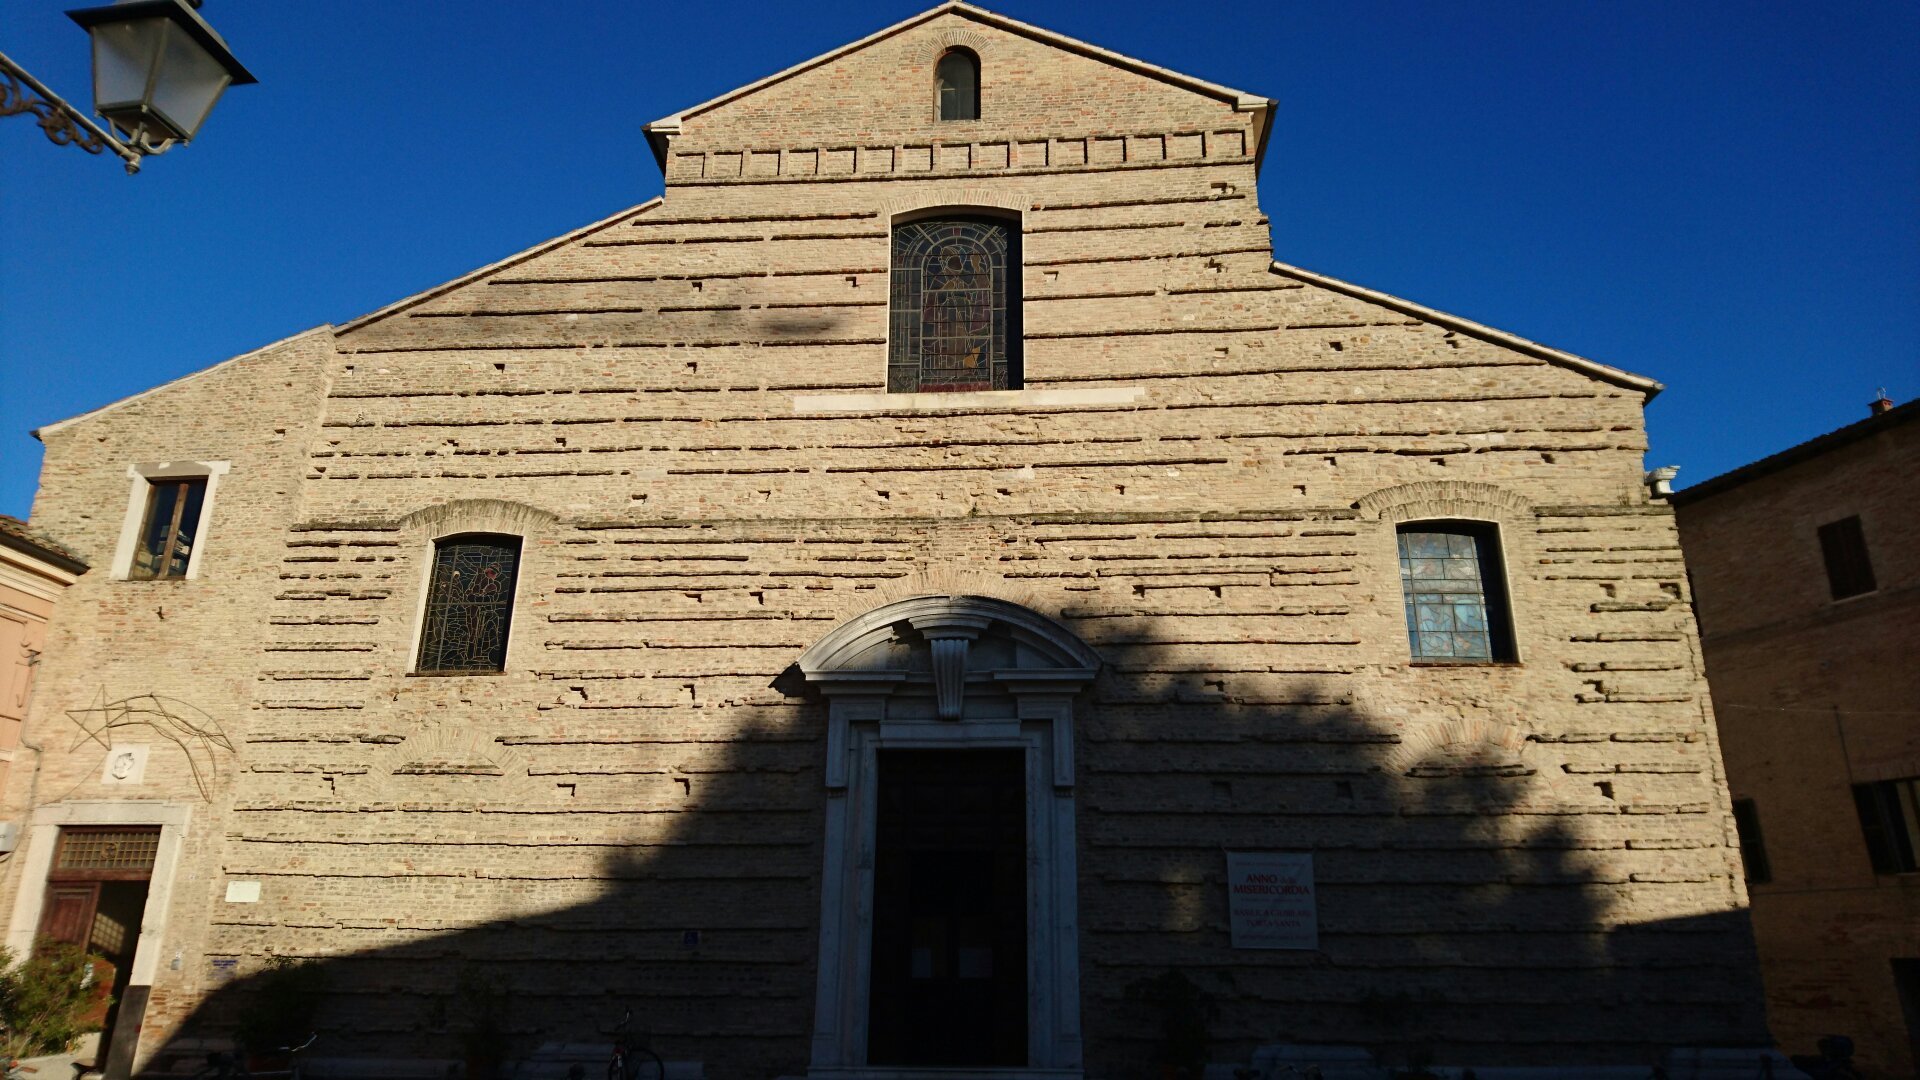 Chiesa di San Paterniano